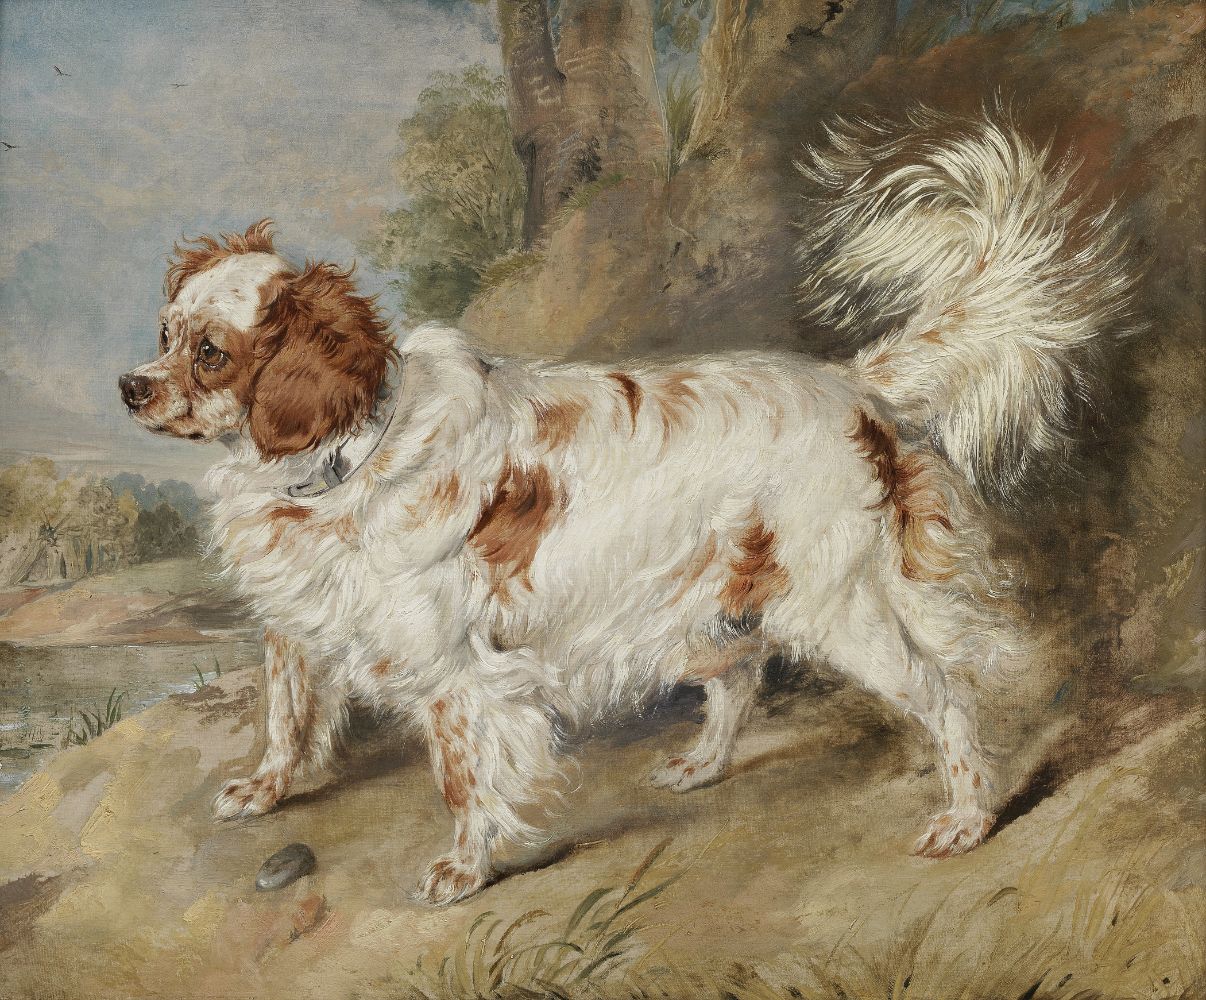 19th Century and British Impressionist Art